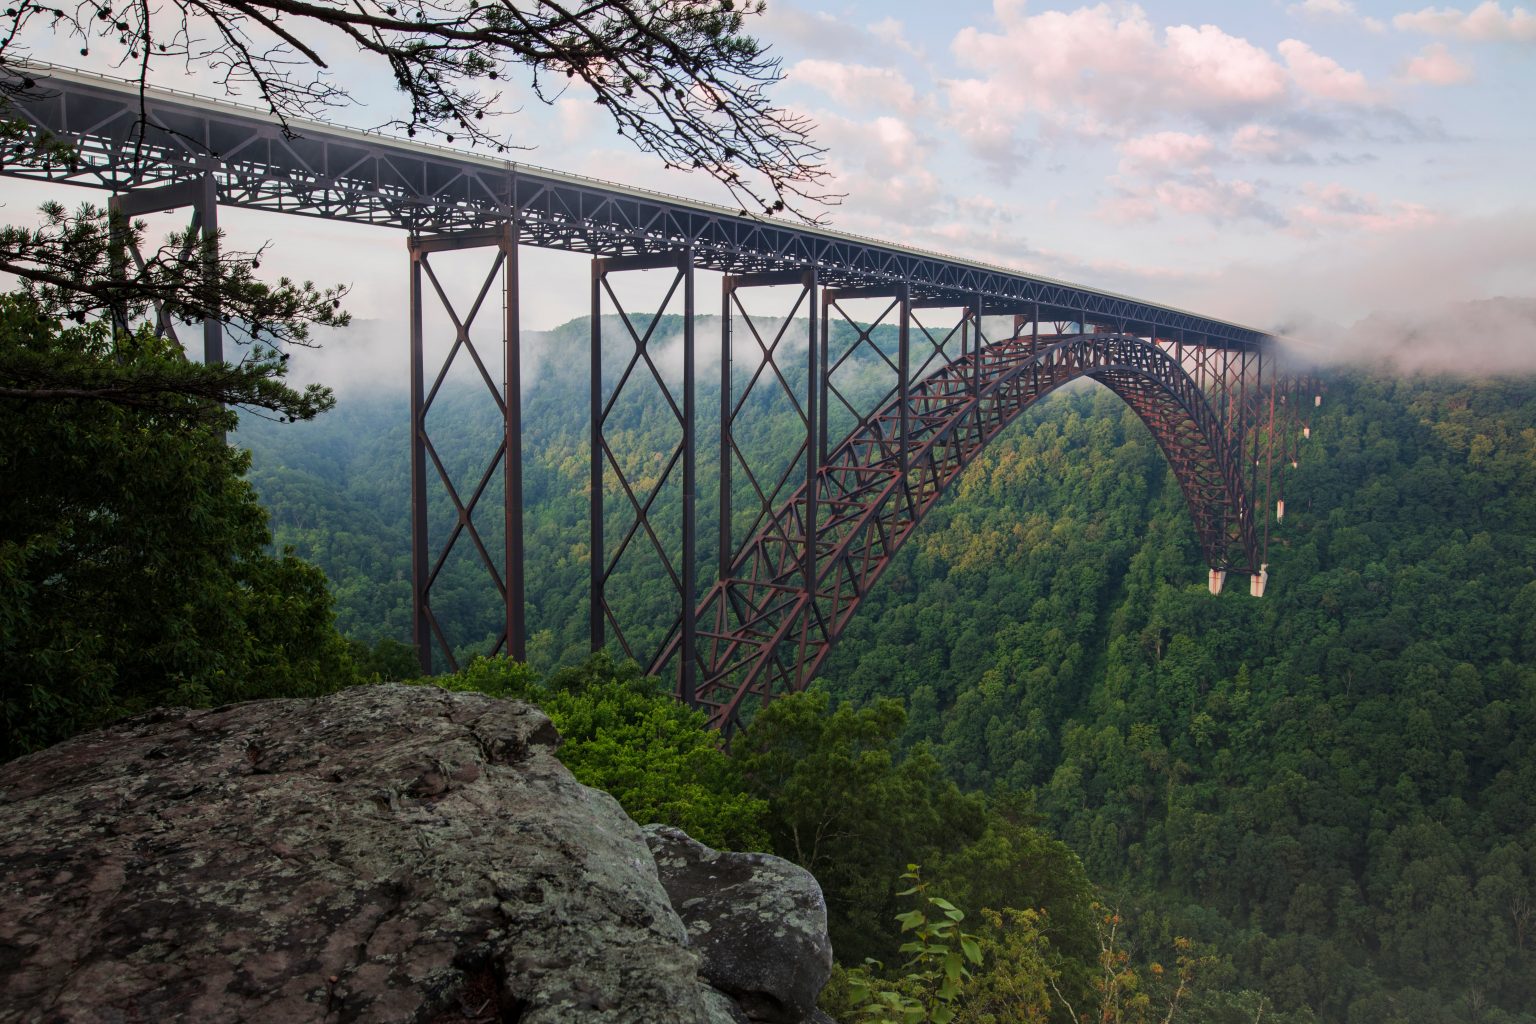 S Tt Att Uppleva New River Gorge Bridge Bes K S Dra West Virginia